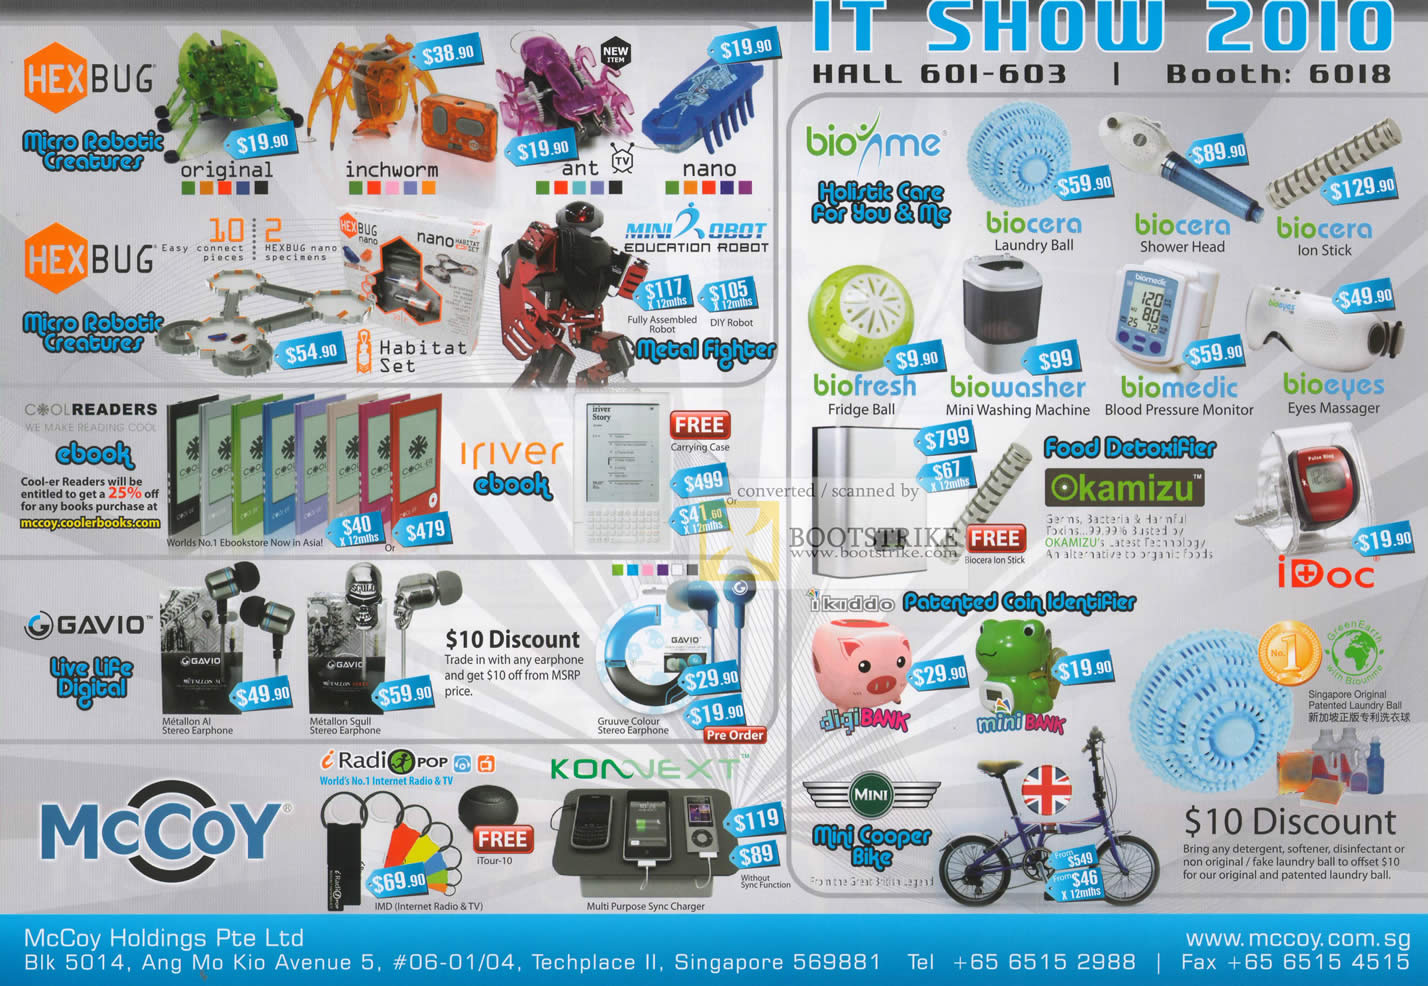 IT Show 2010 price list image brochure of Mccoy Hexbug Micro Robots Biocera Iriver Ebook Gavio IDoc Konext IKiddo